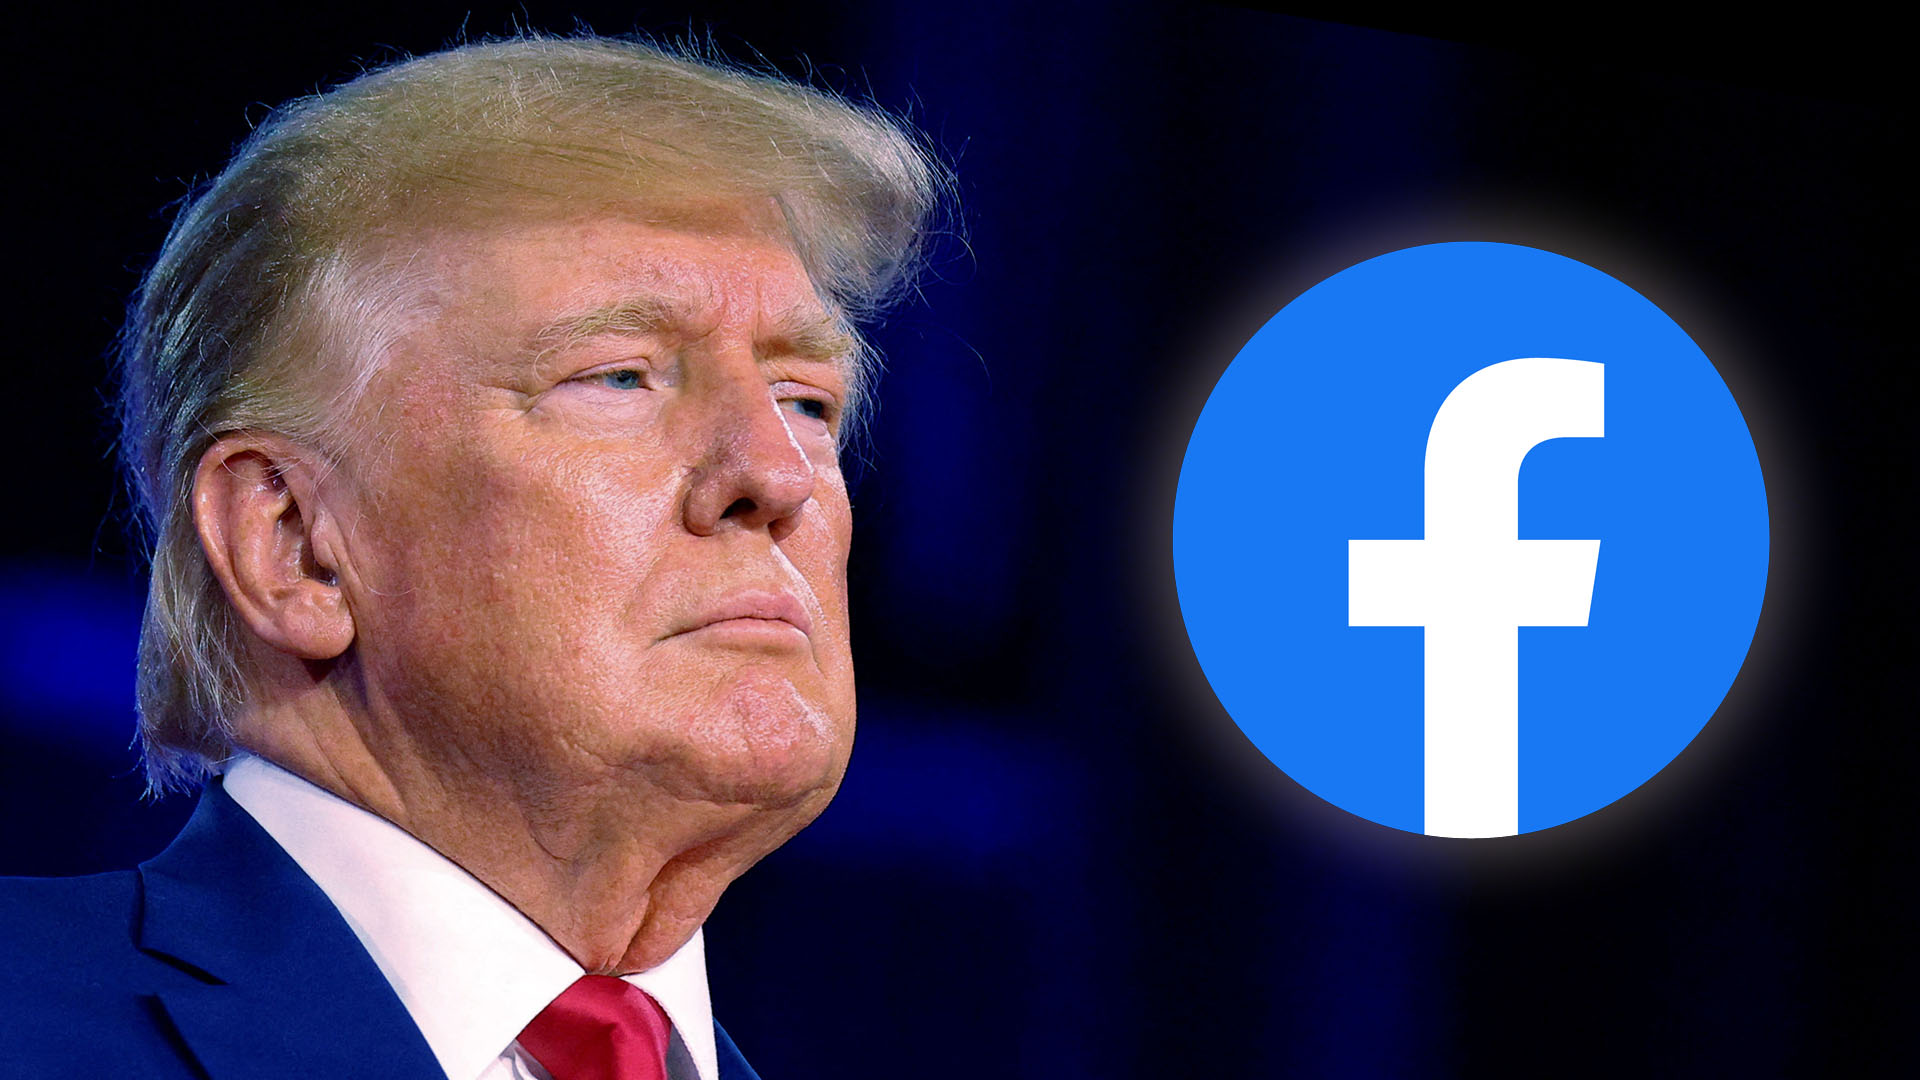 Facebook debates reinstating Donald Trump’s account